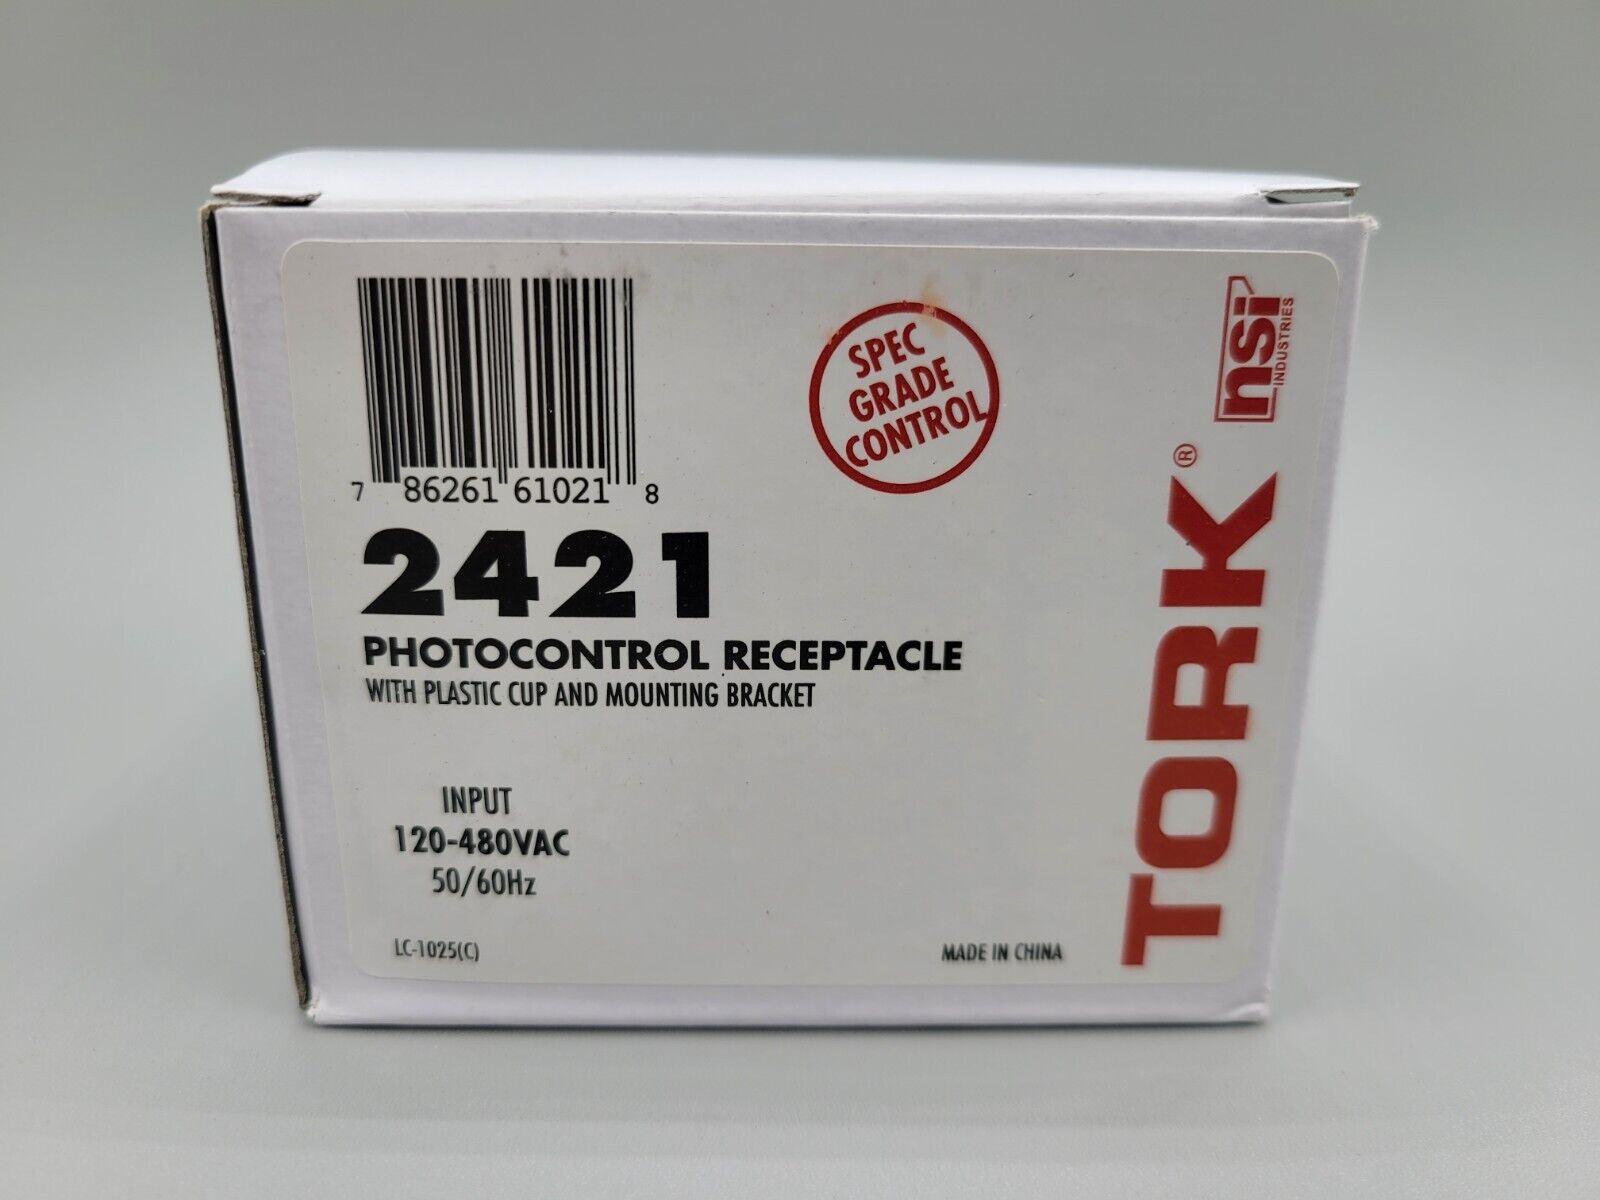 NEW Tork 2421 Photo Control Receptacle Mounting Bracket Spec Grade 120-480 VAC